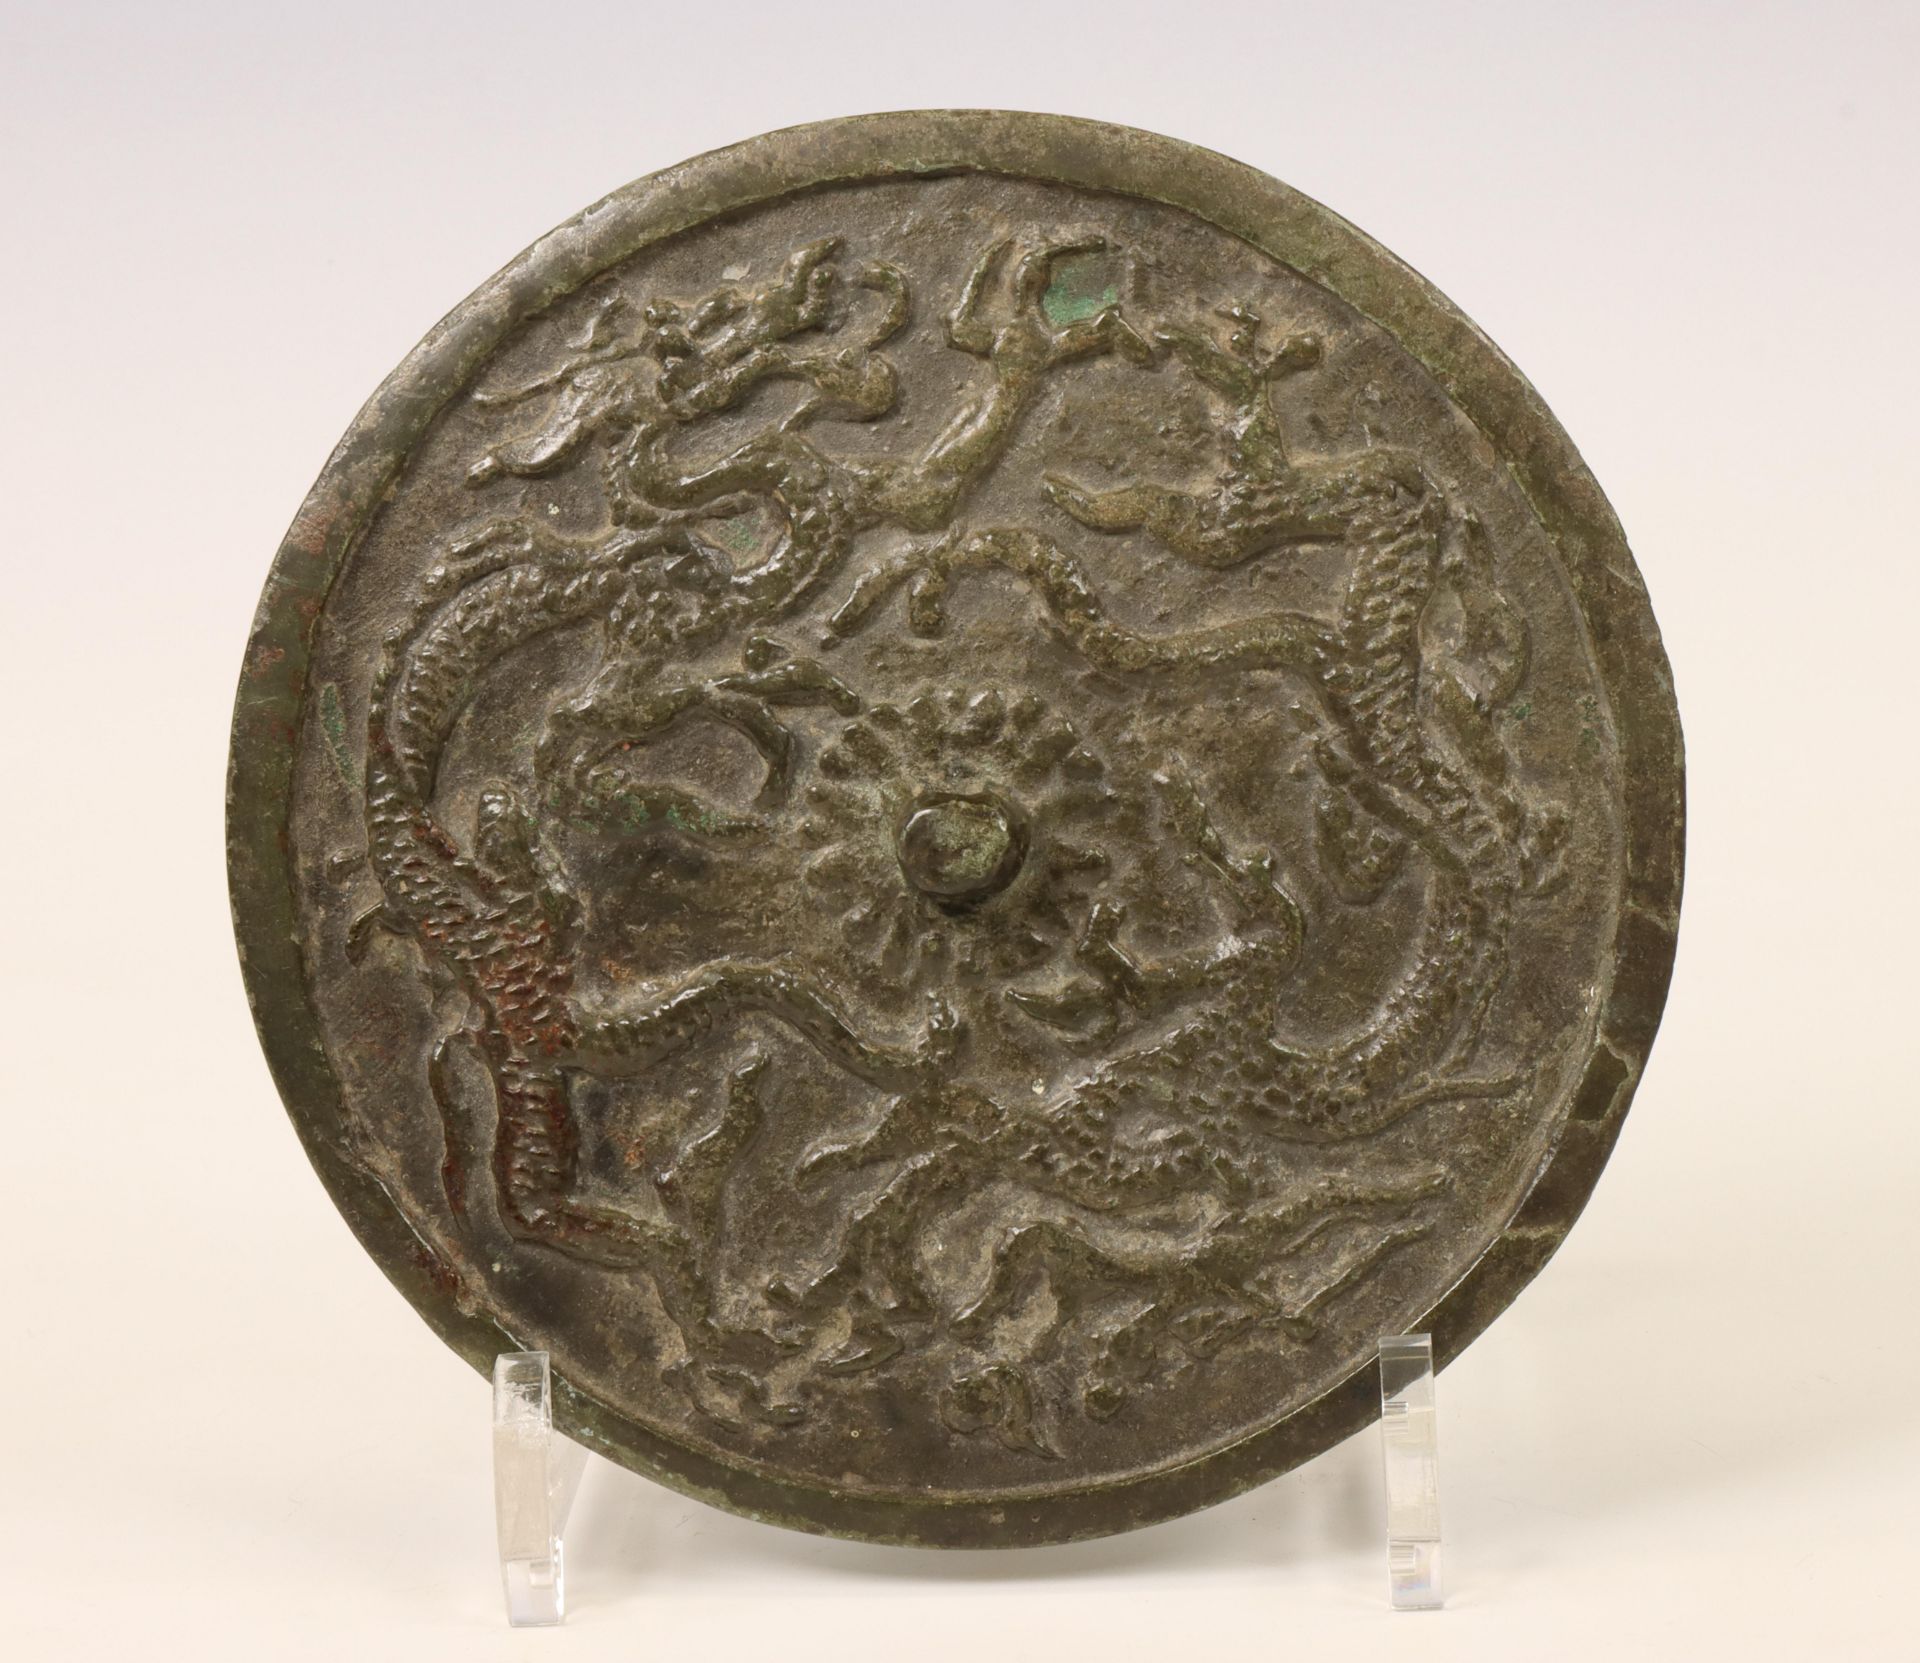 China, bronze 'dragon' mirror, probably Qing dynasty (1644-1912),